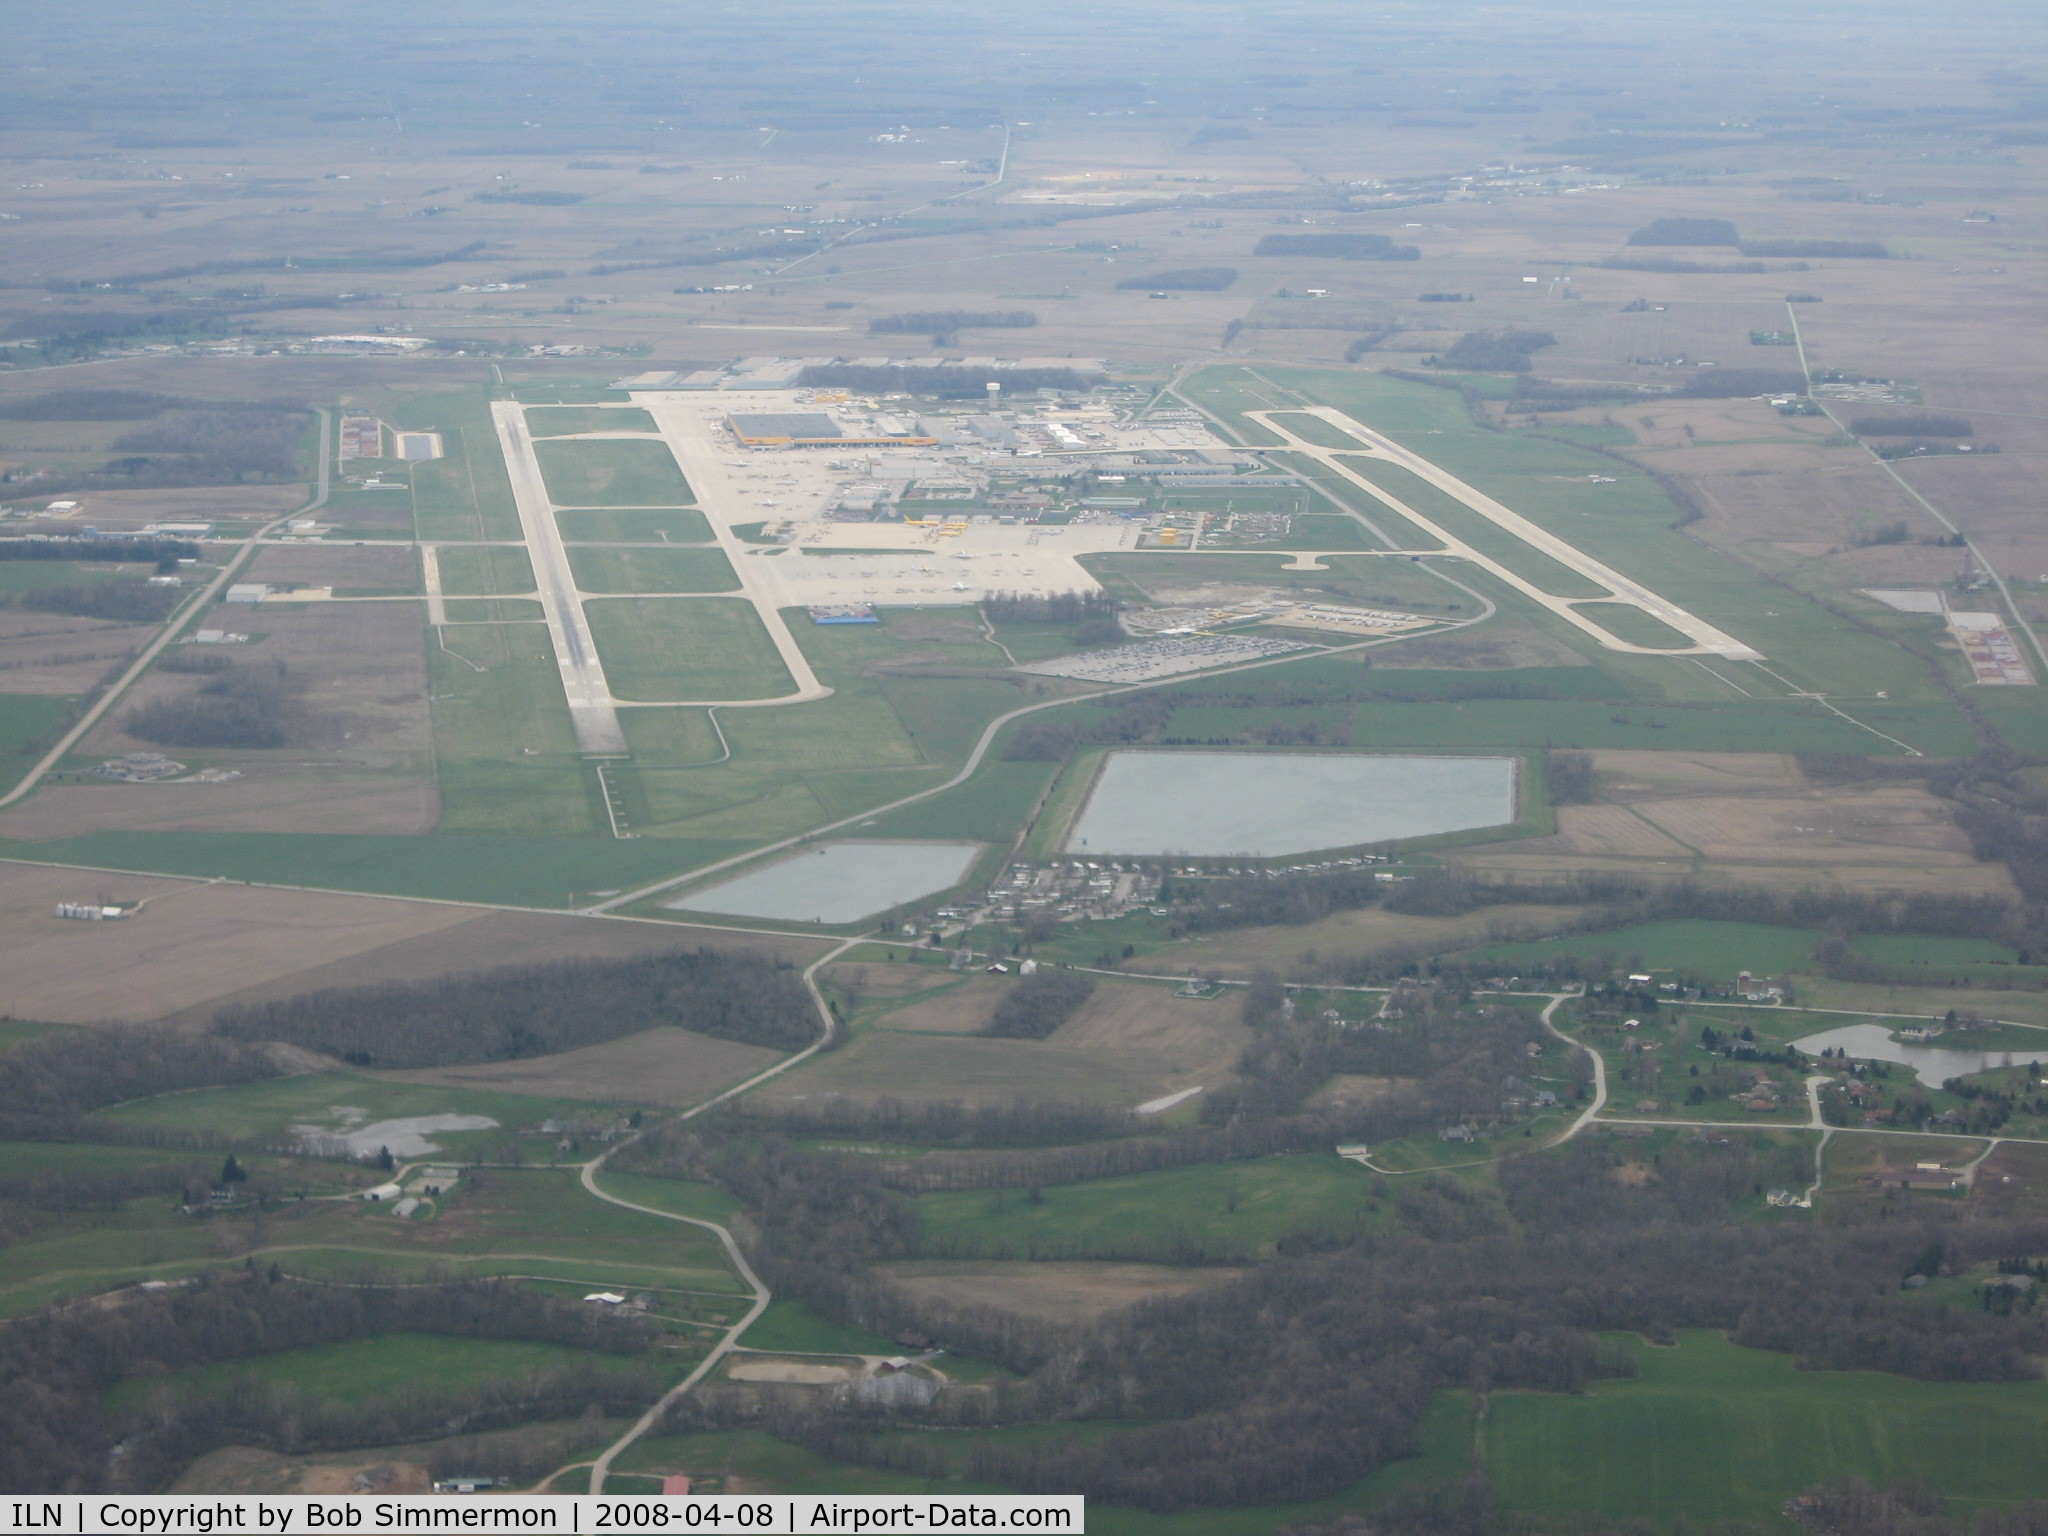 Wilmington Air Park Airport (ILN) - Final approach - 22L